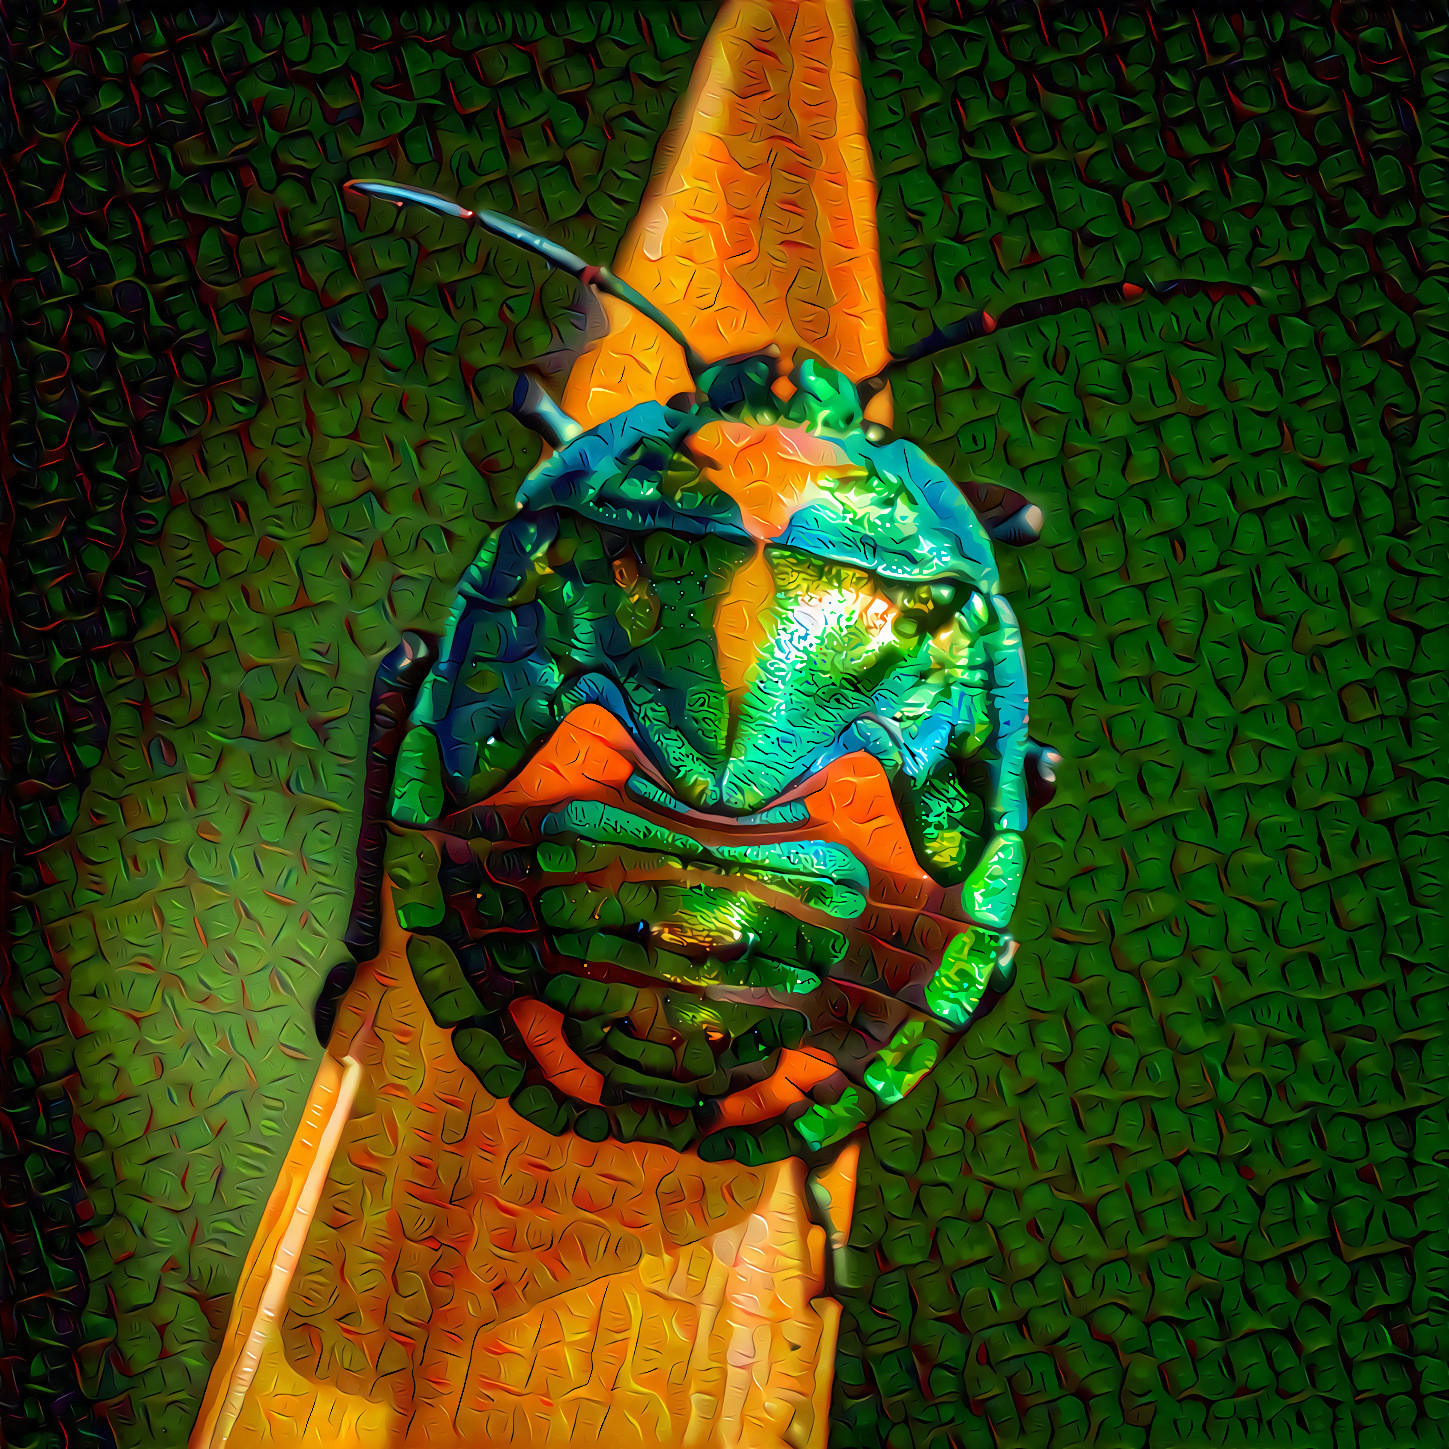 Rainbow Beetle.  Original photo by Stephen Hocking On Unsplash.